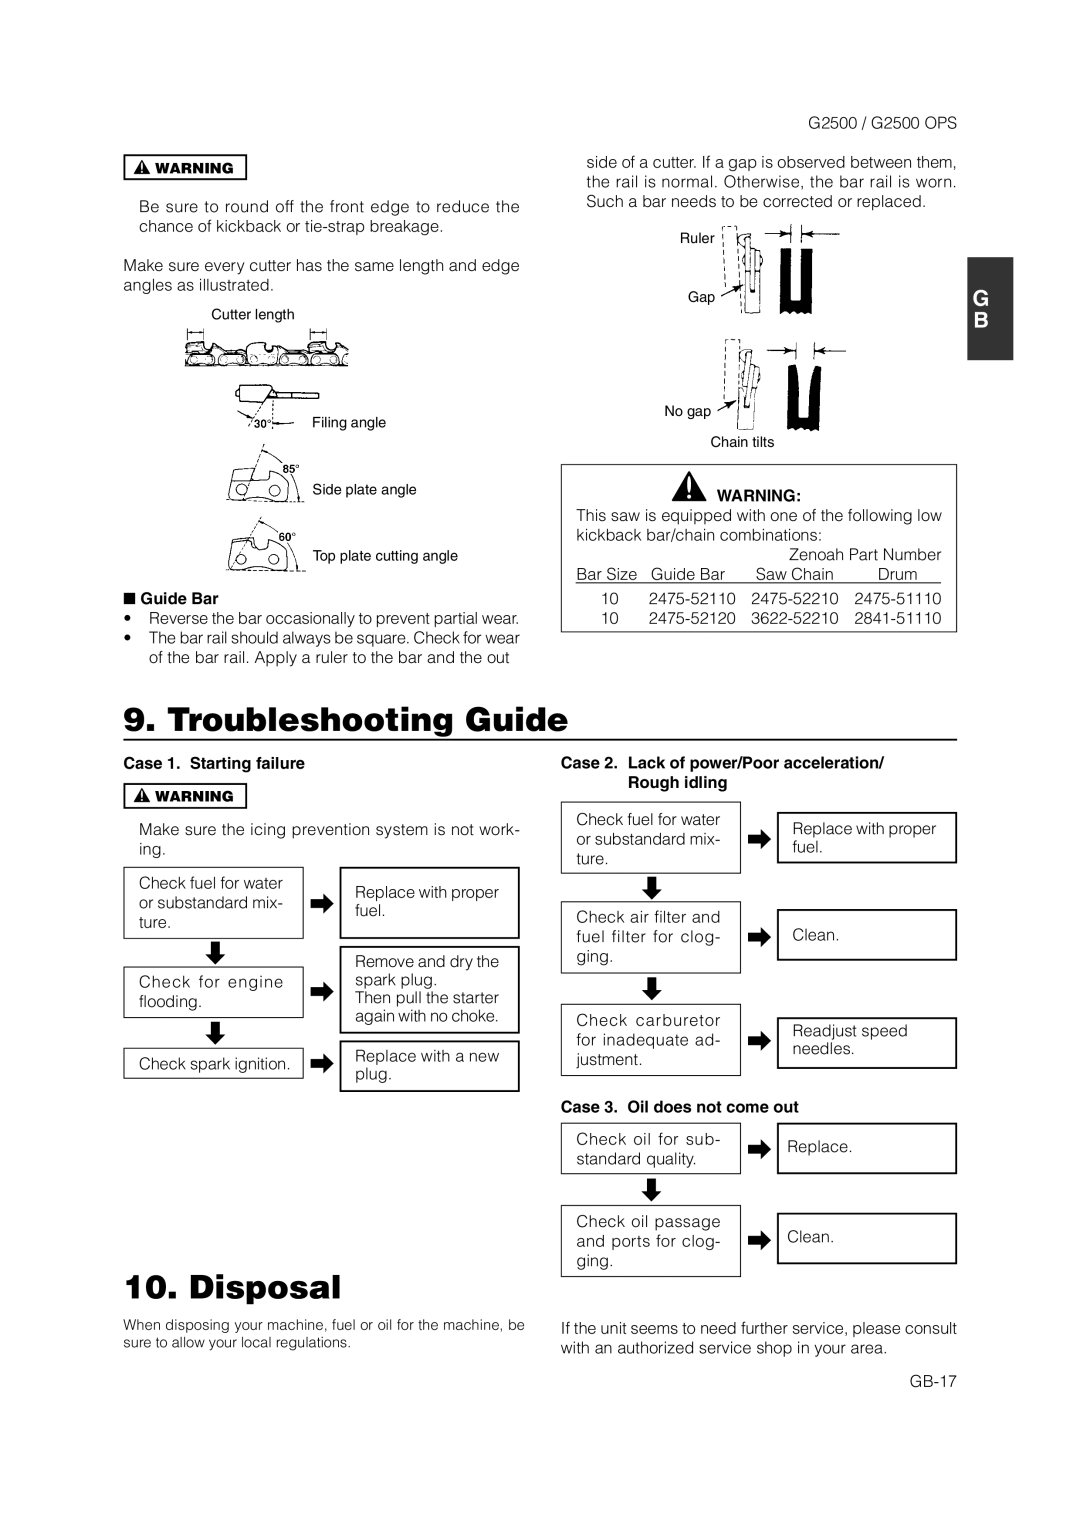 Zenoah G2500 OPS owner manual Troubleshooting Guide, Disposal 